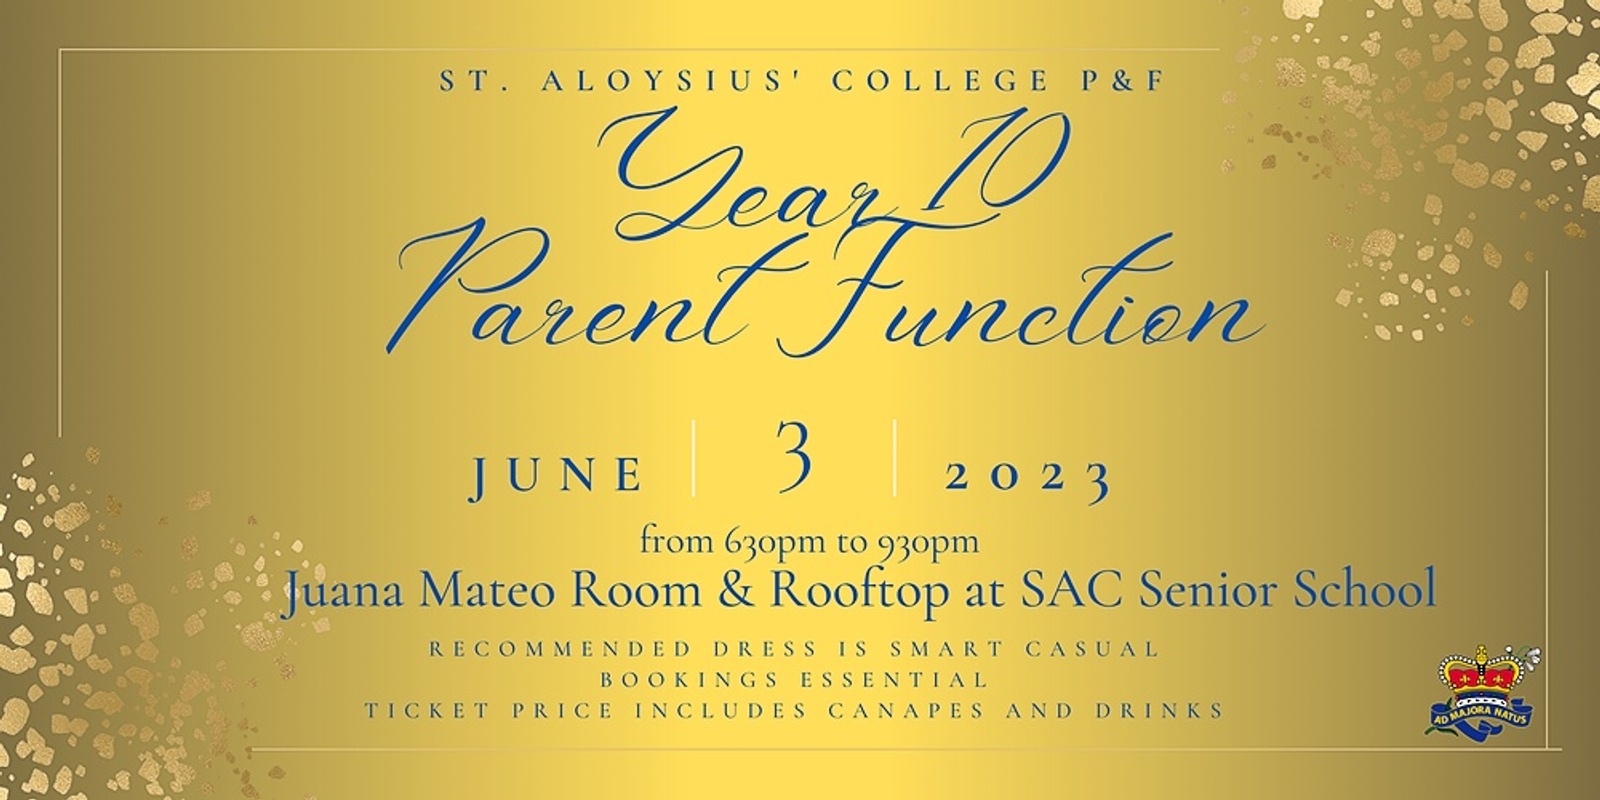 St. Aloysius' College P&F Year 10 Parent Function 2023